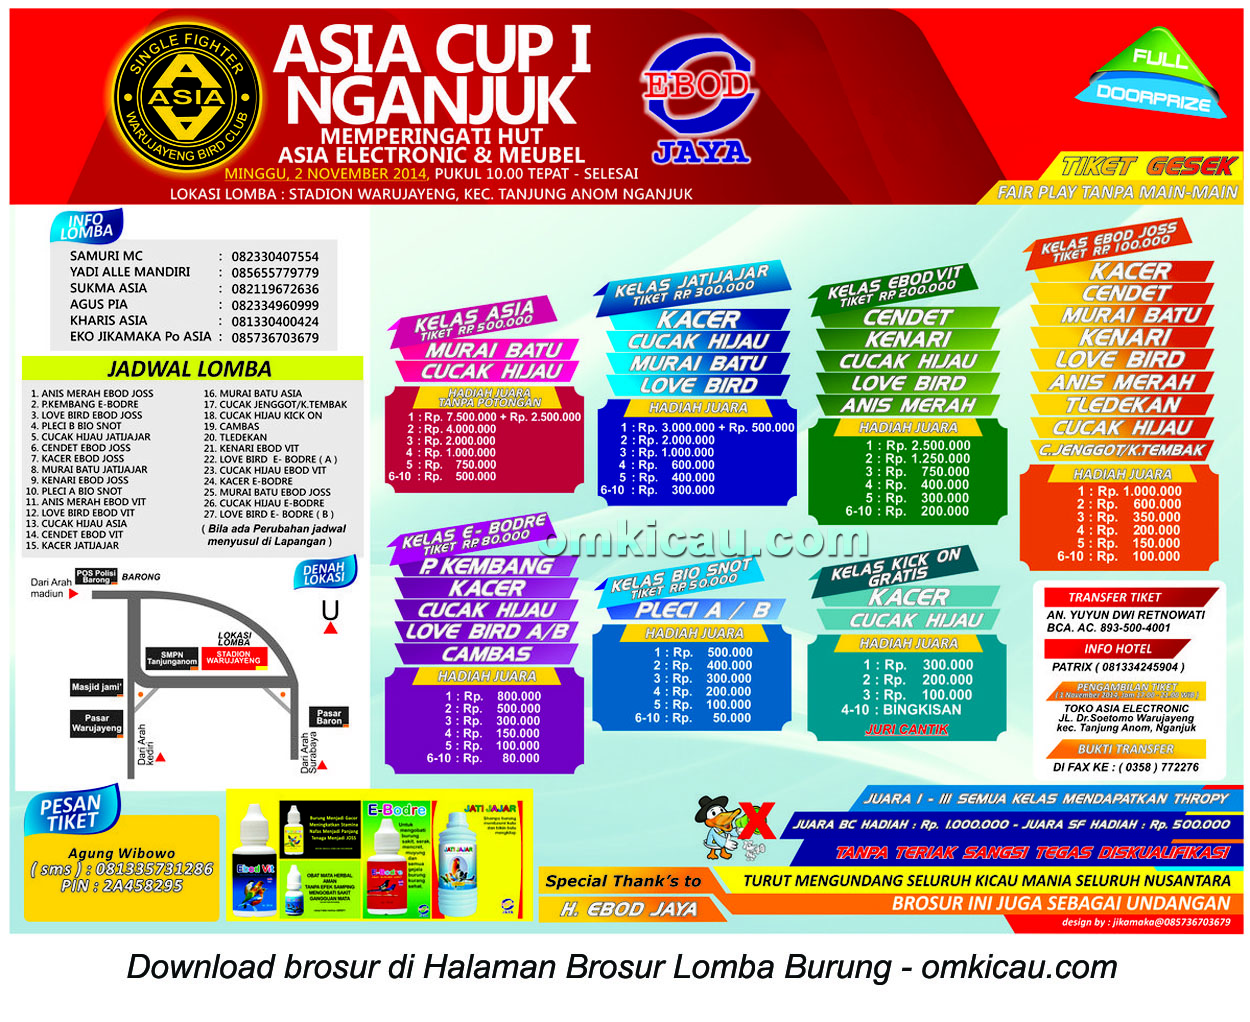 Brosur Lomba Burung Berkicau Asia Cup I, Nganjuk, 2 November 2014